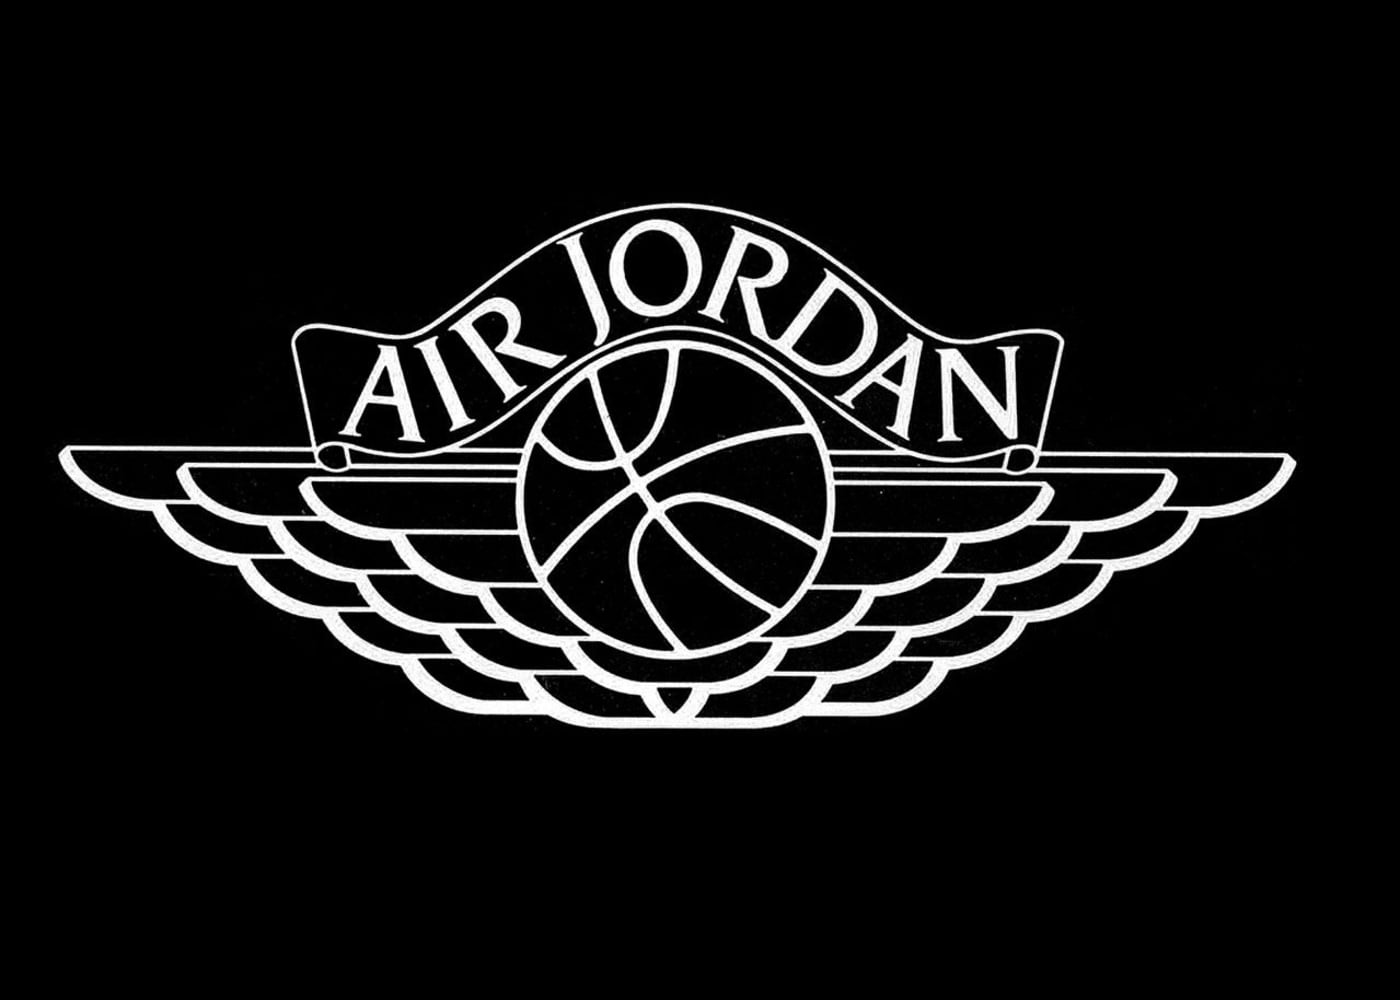 air jordan logo meaning